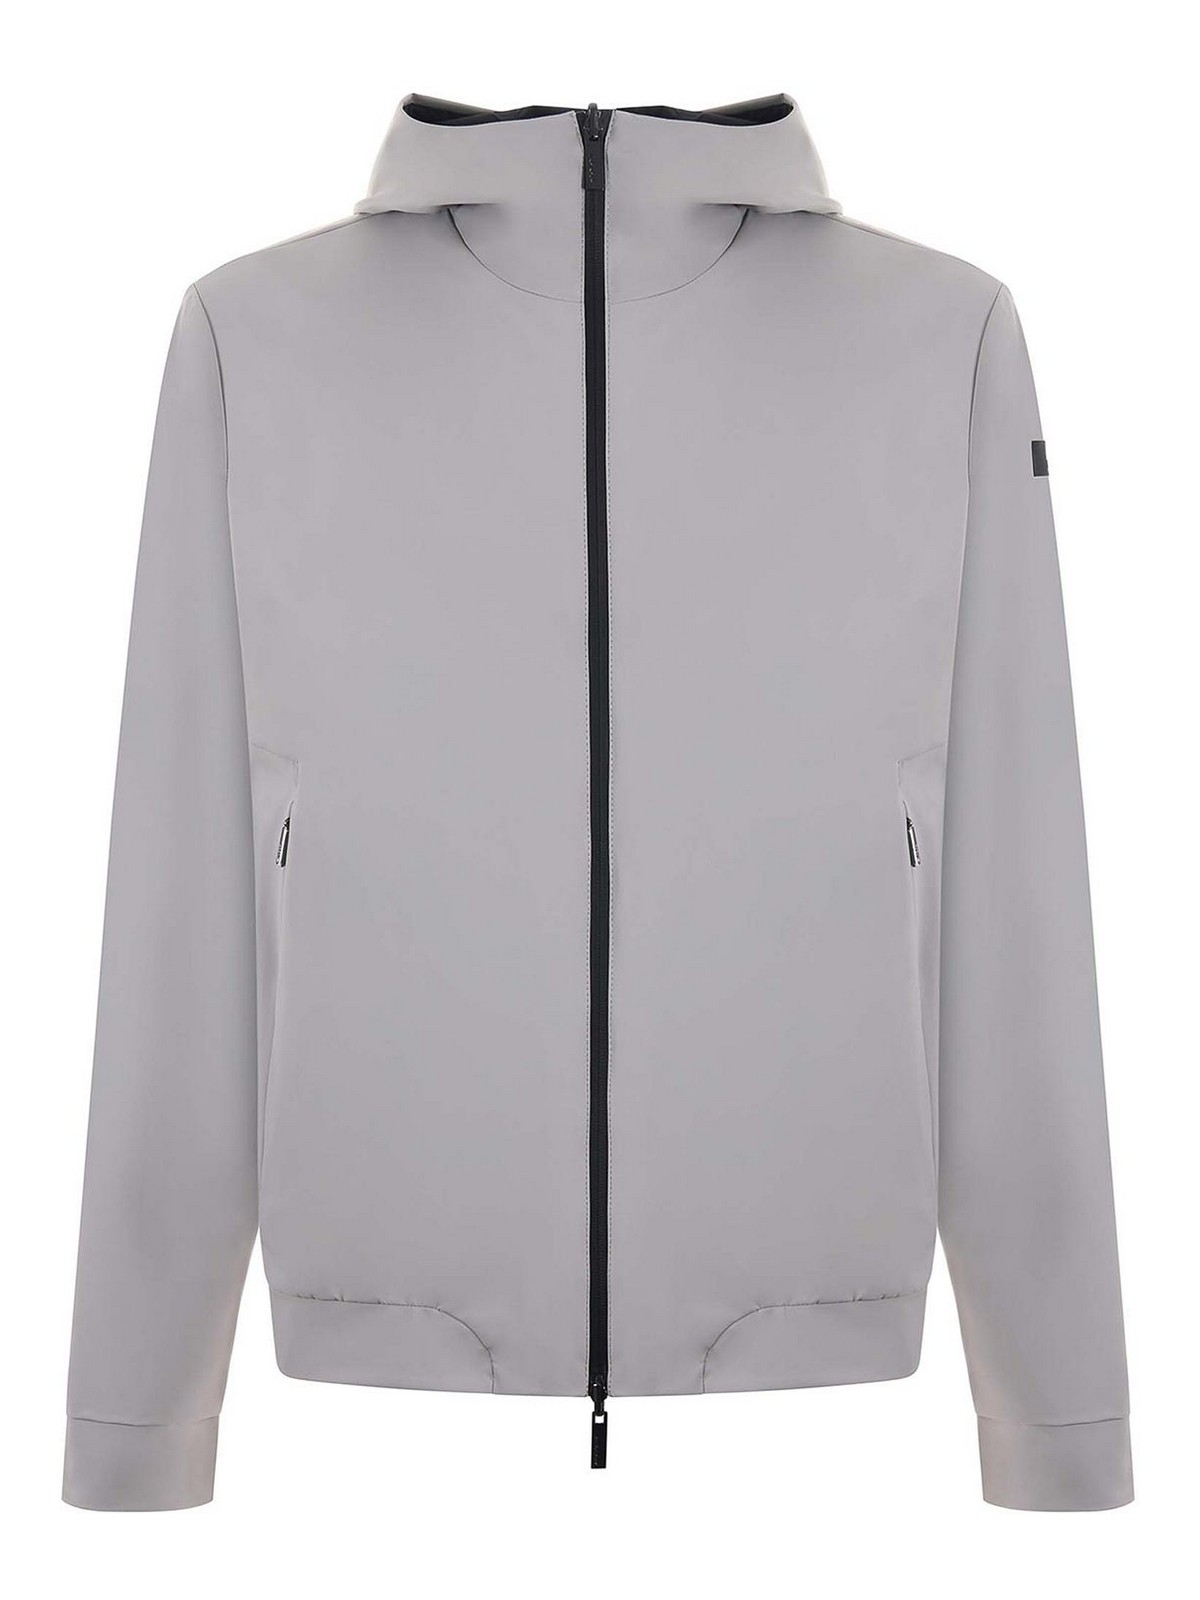 Rrd Roberto Ricci Designs Reversible Jacket In Gray